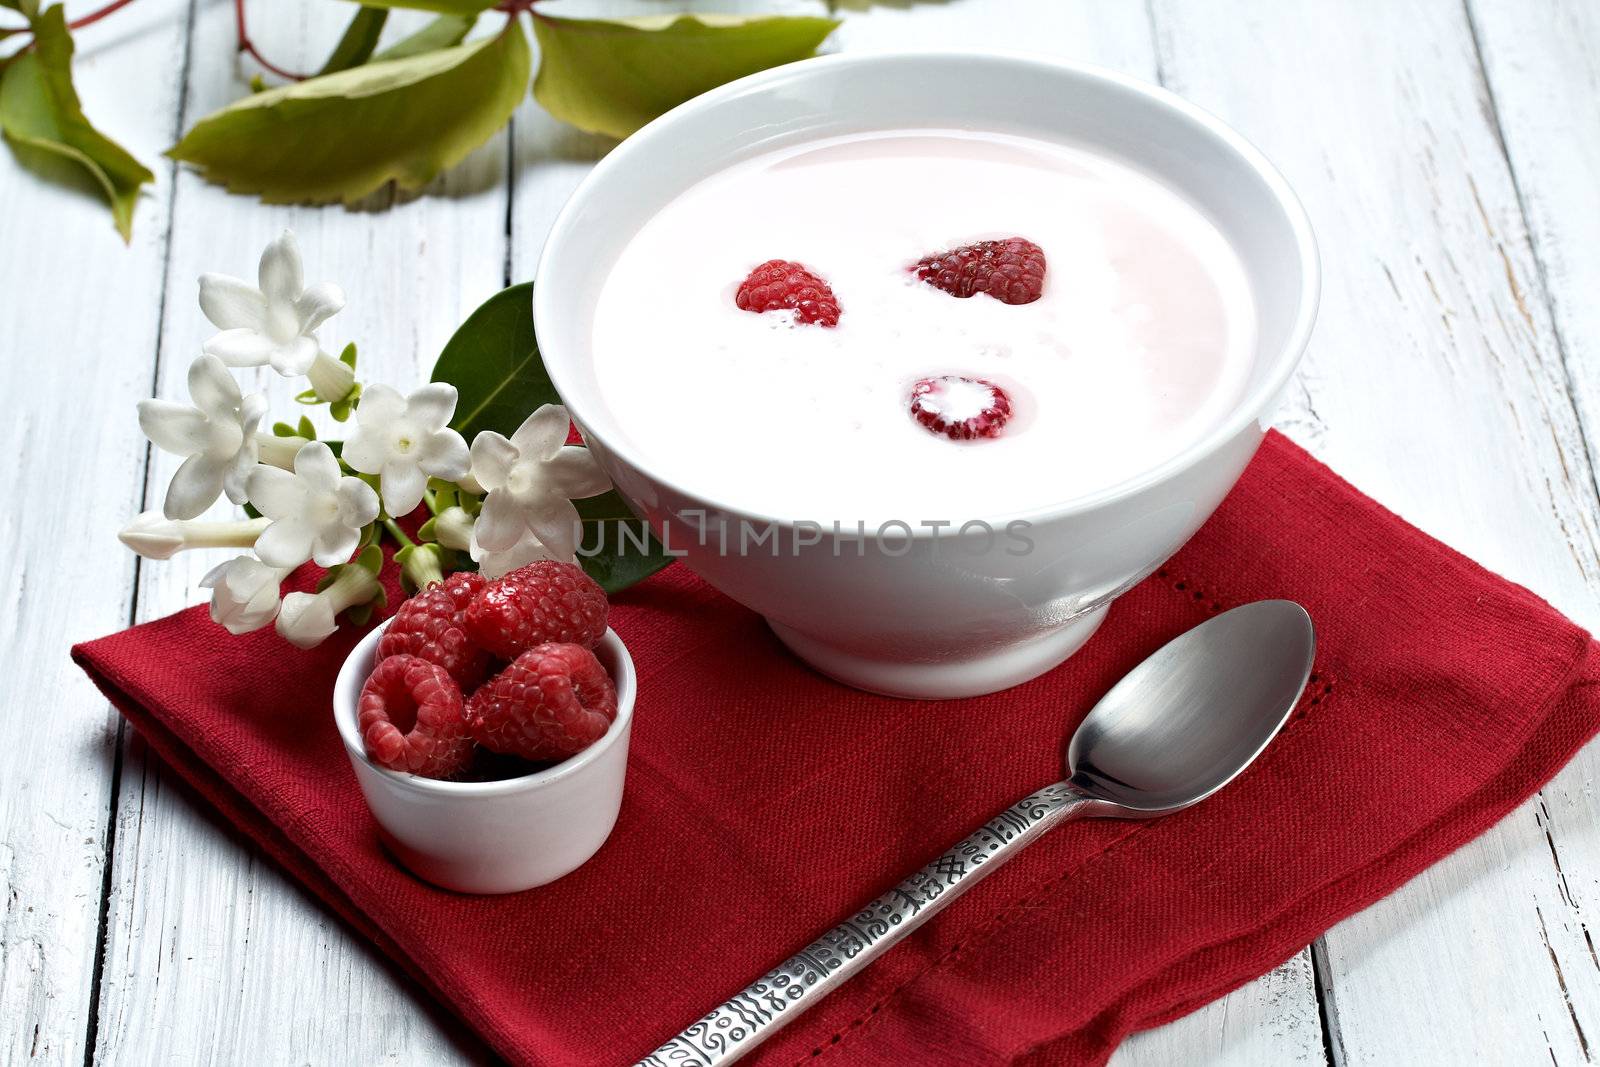 some fresh seasonal summer raspberries with yogurt